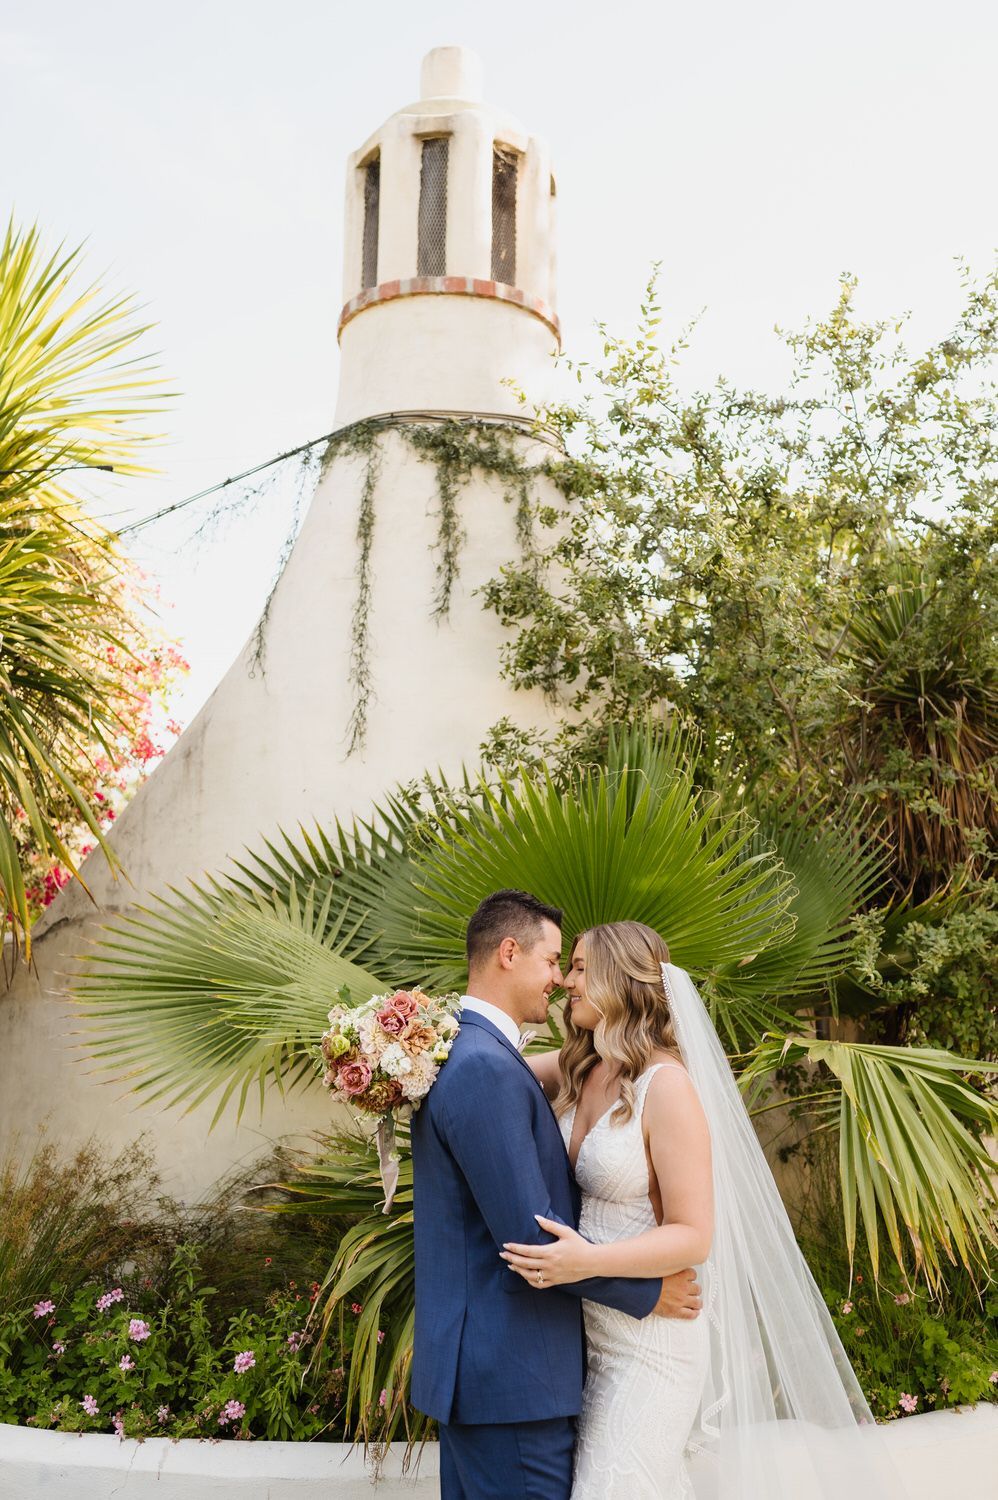 Wedding photos and videos taken at Tivoli in Fallbrook California